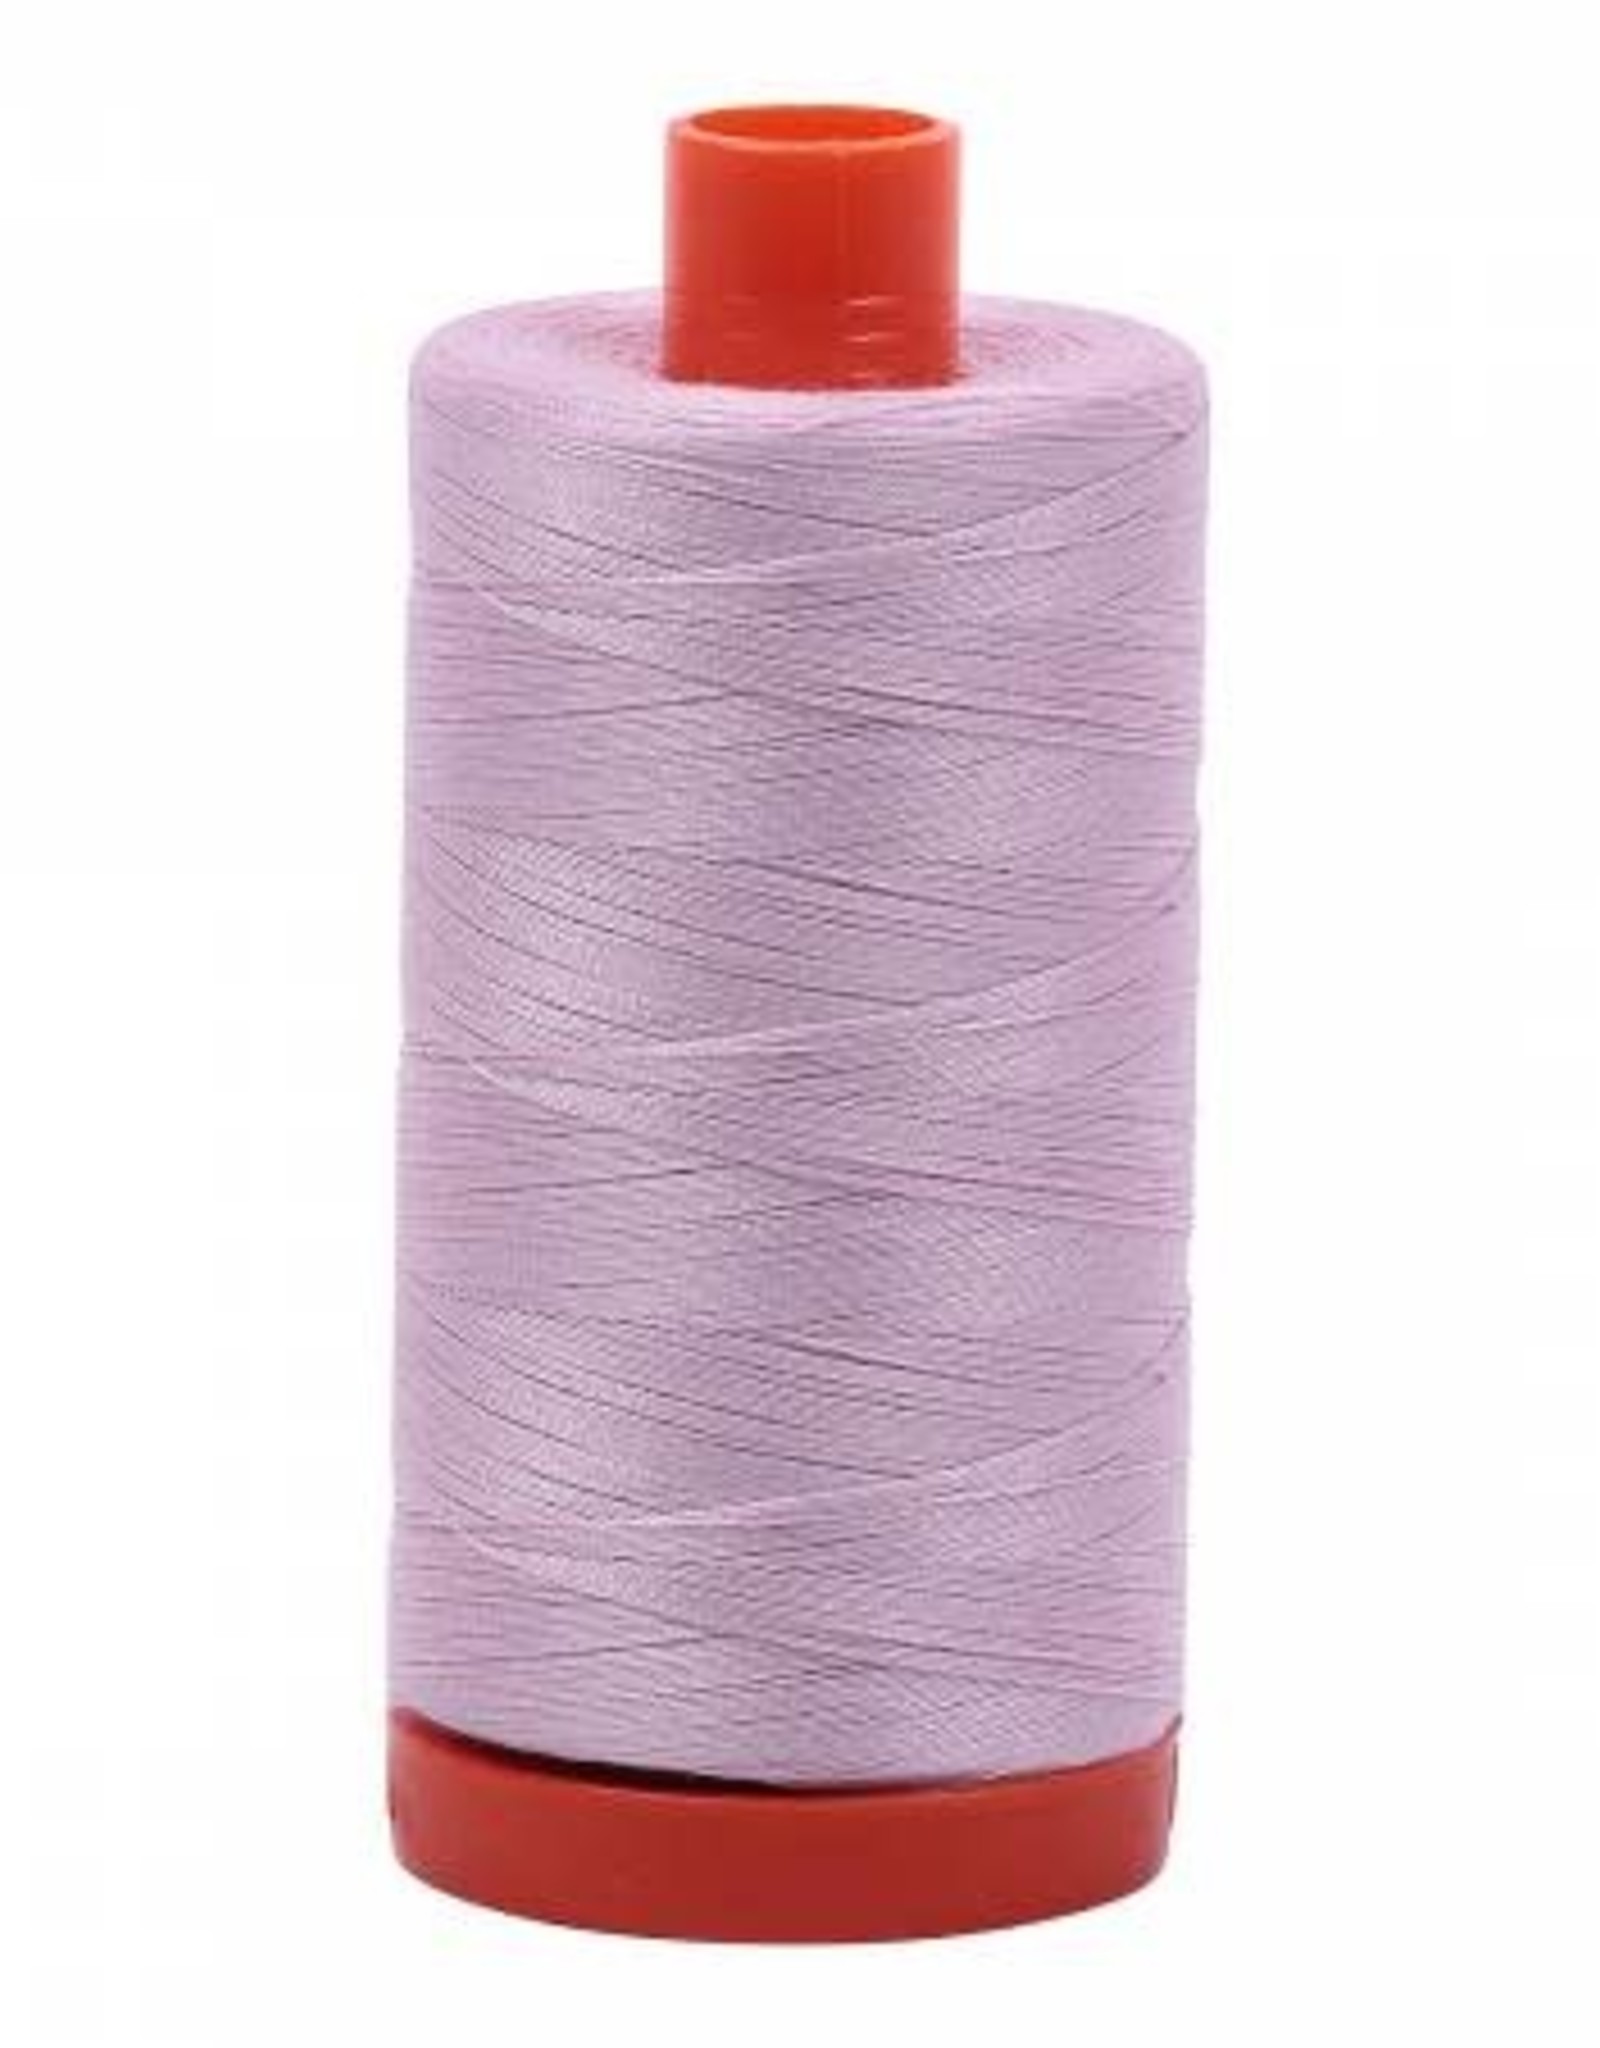 Mako Cotton Thread Solid 50wt - Light Lilac (2510)